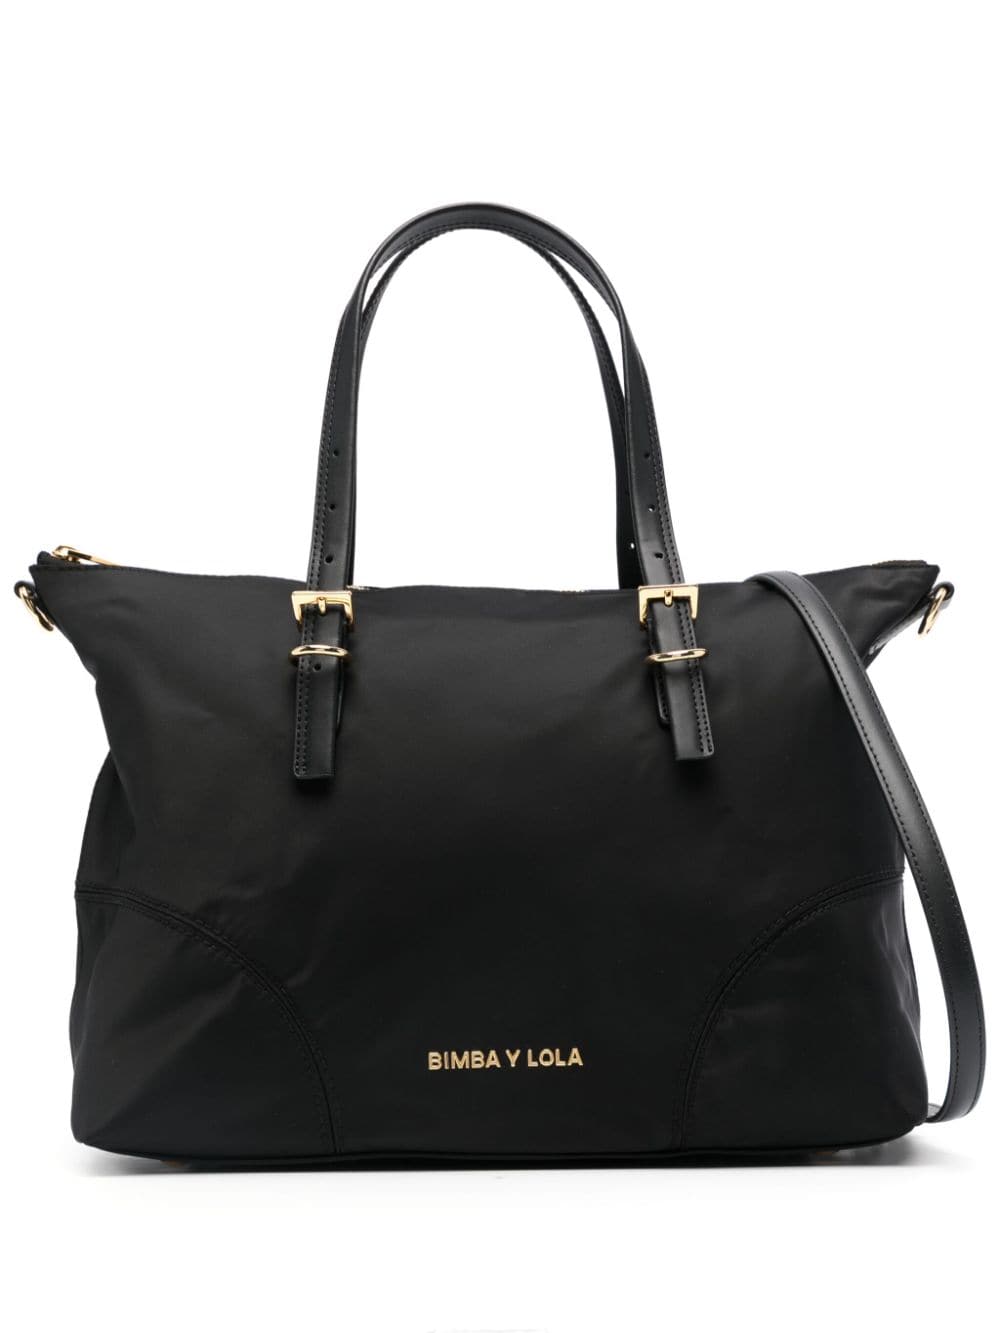 Bimba y Lola large Shopper tote bag - Black von Bimba y Lola